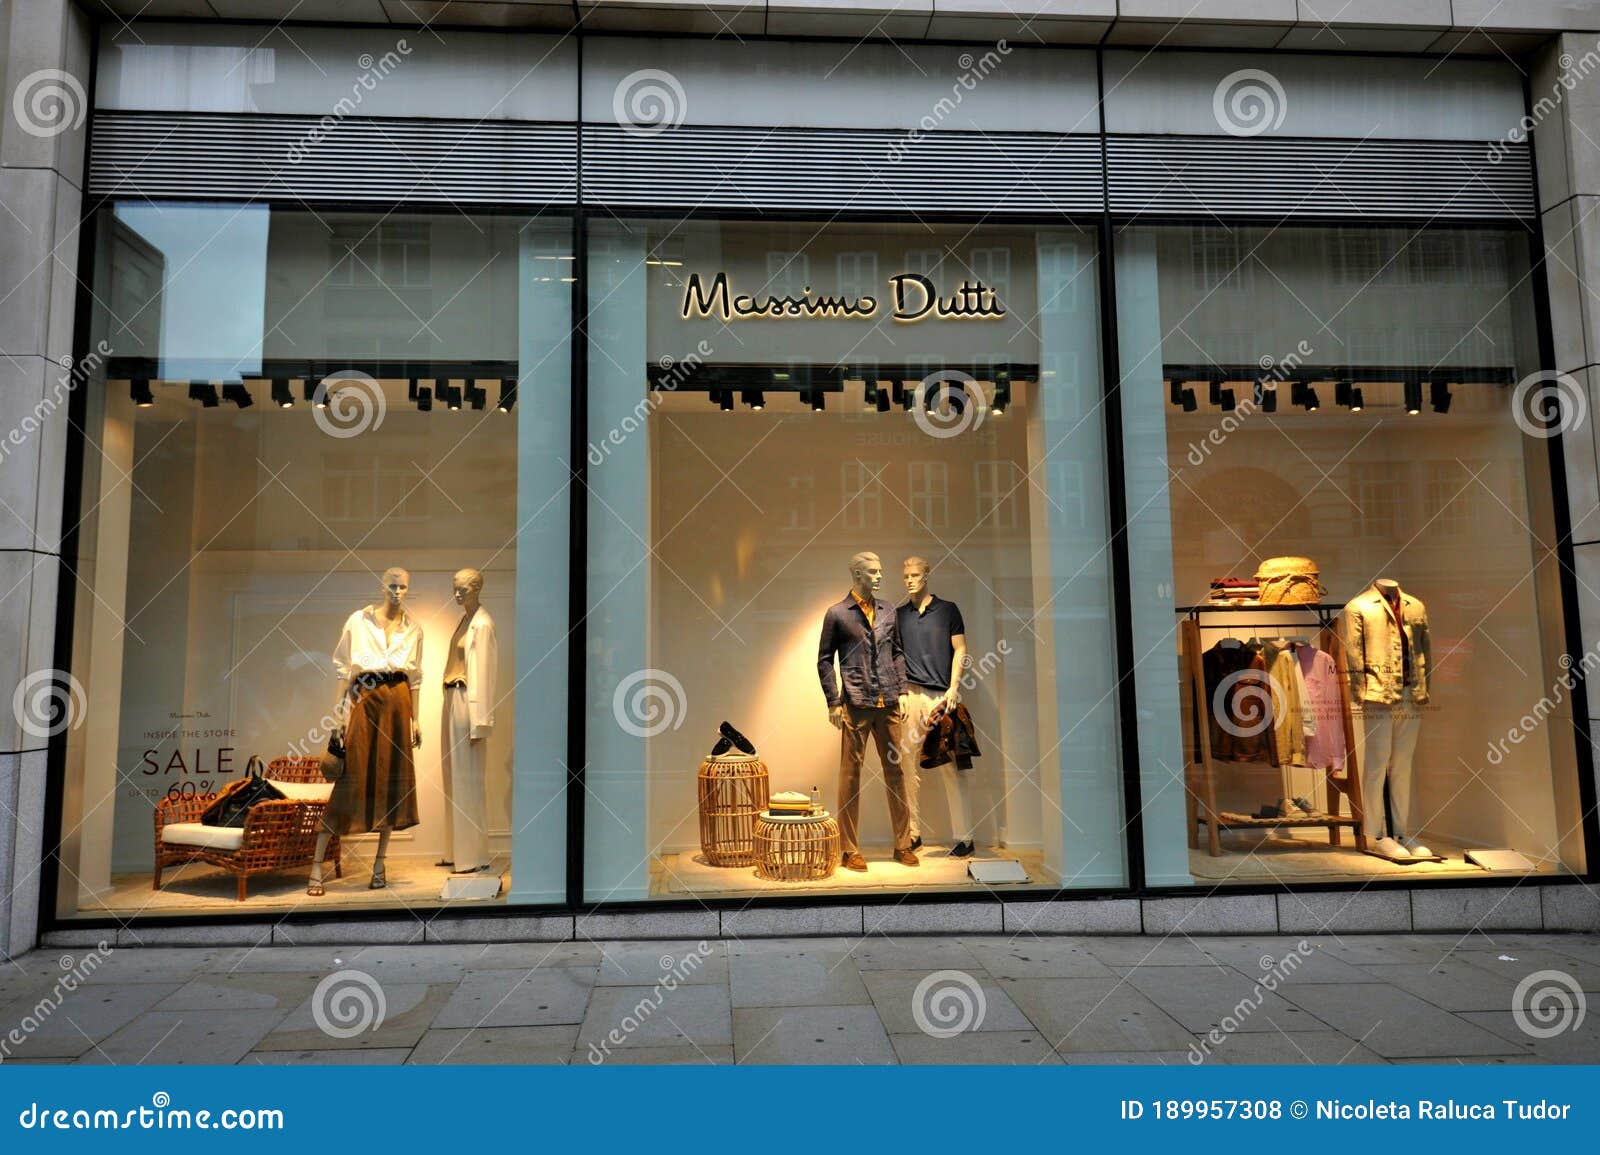 verlichten oogopslag Onderscheid Spanish Fashion Store Massimo Dutti in 100 Cheapside in London, UK  Editorial Stock Photo - Image of diversified, design: 189957308